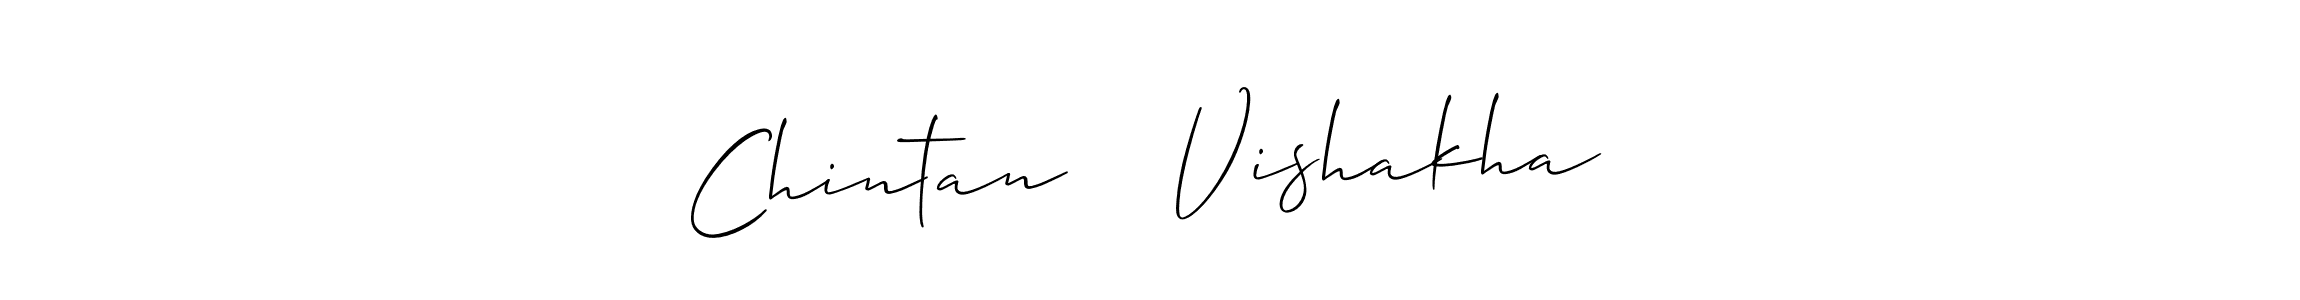 How to Draw Chintan ❤️ Vishakha signature style? Allison_Script is a latest design signature styles for name Chintan ❤️ Vishakha. Chintan ❤️ Vishakha signature style 2 images and pictures png